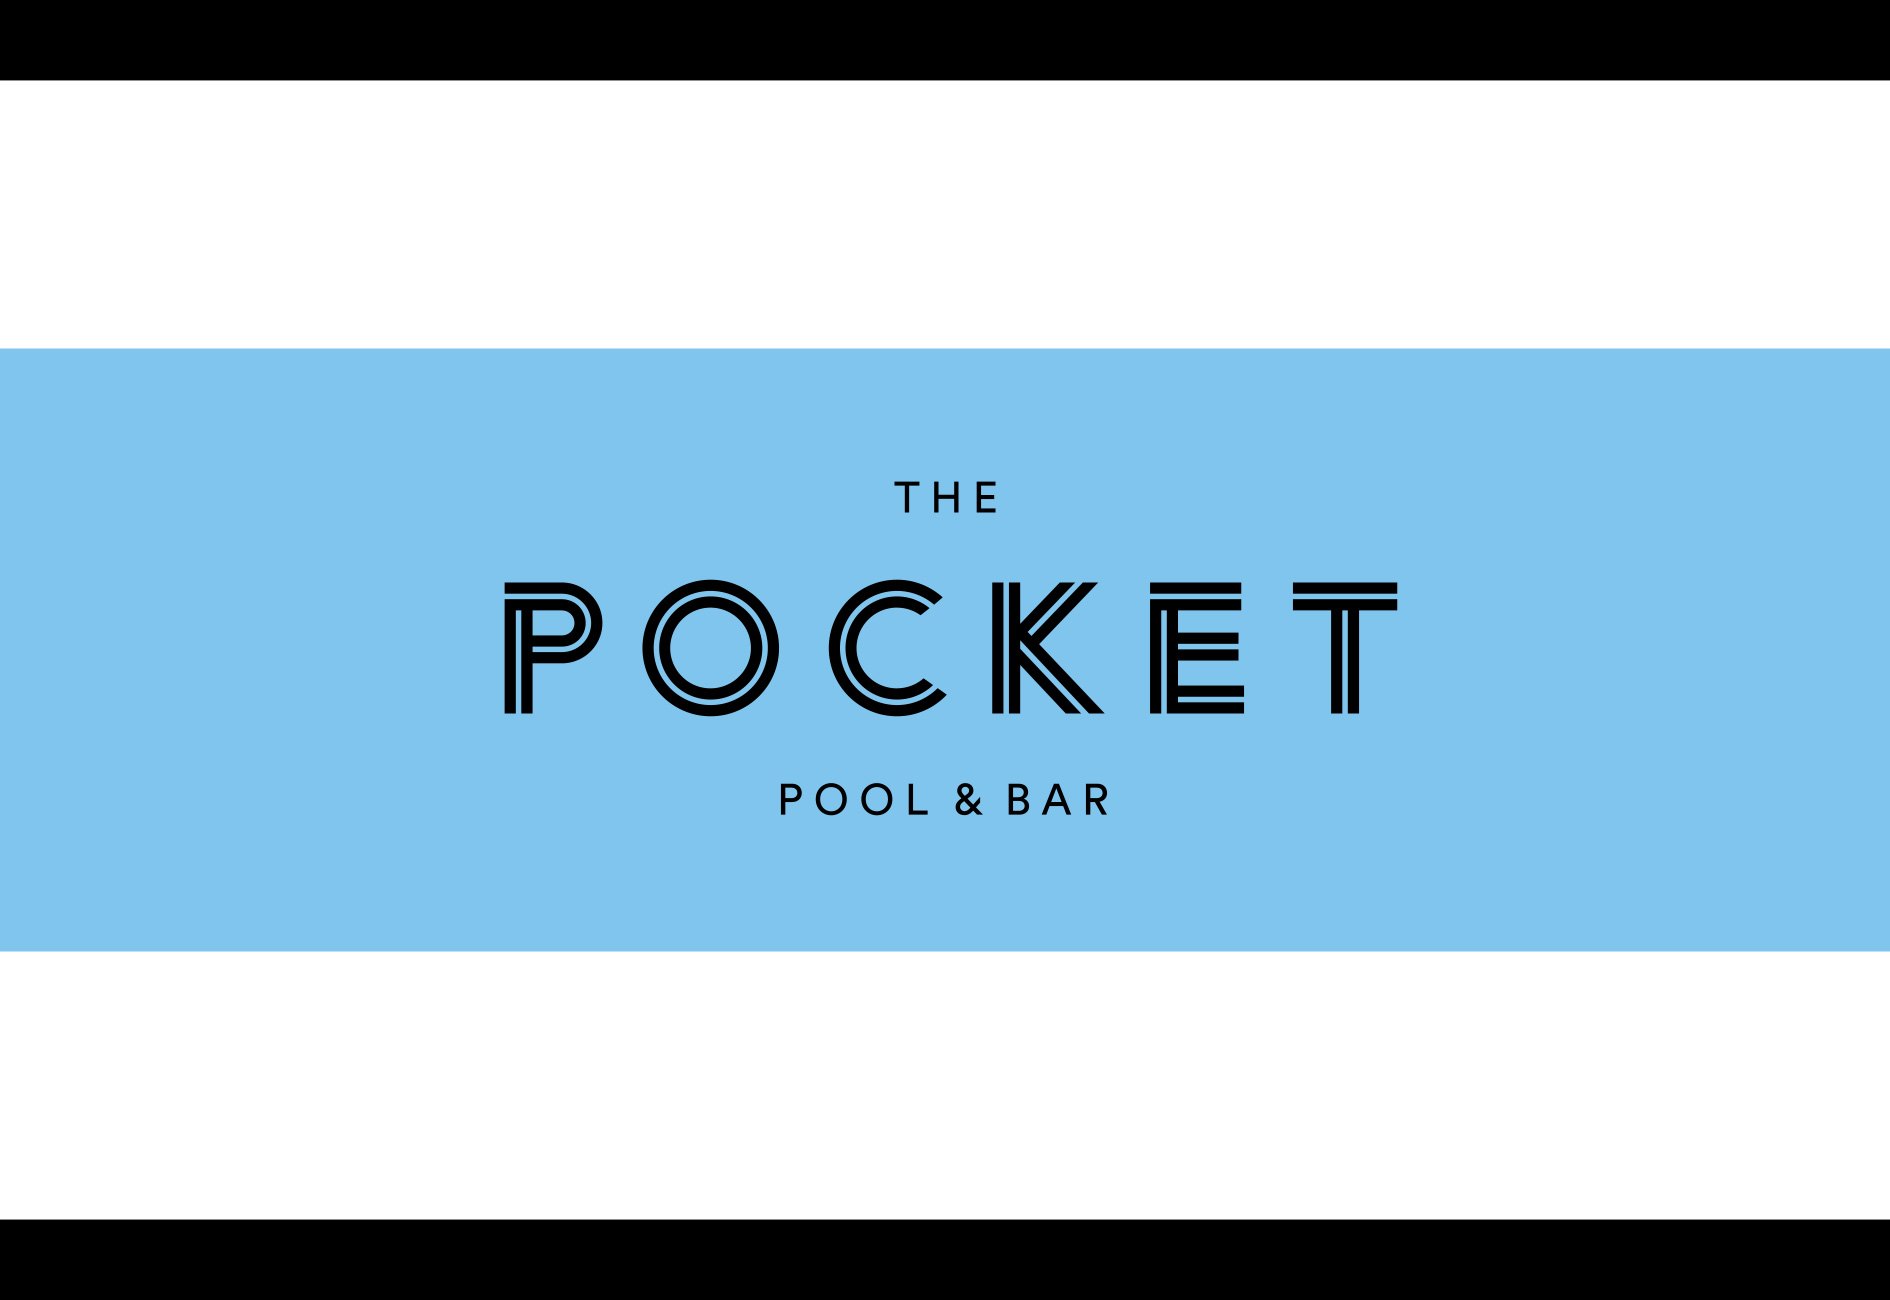 The Pocket Branding designed by Mark Zeff